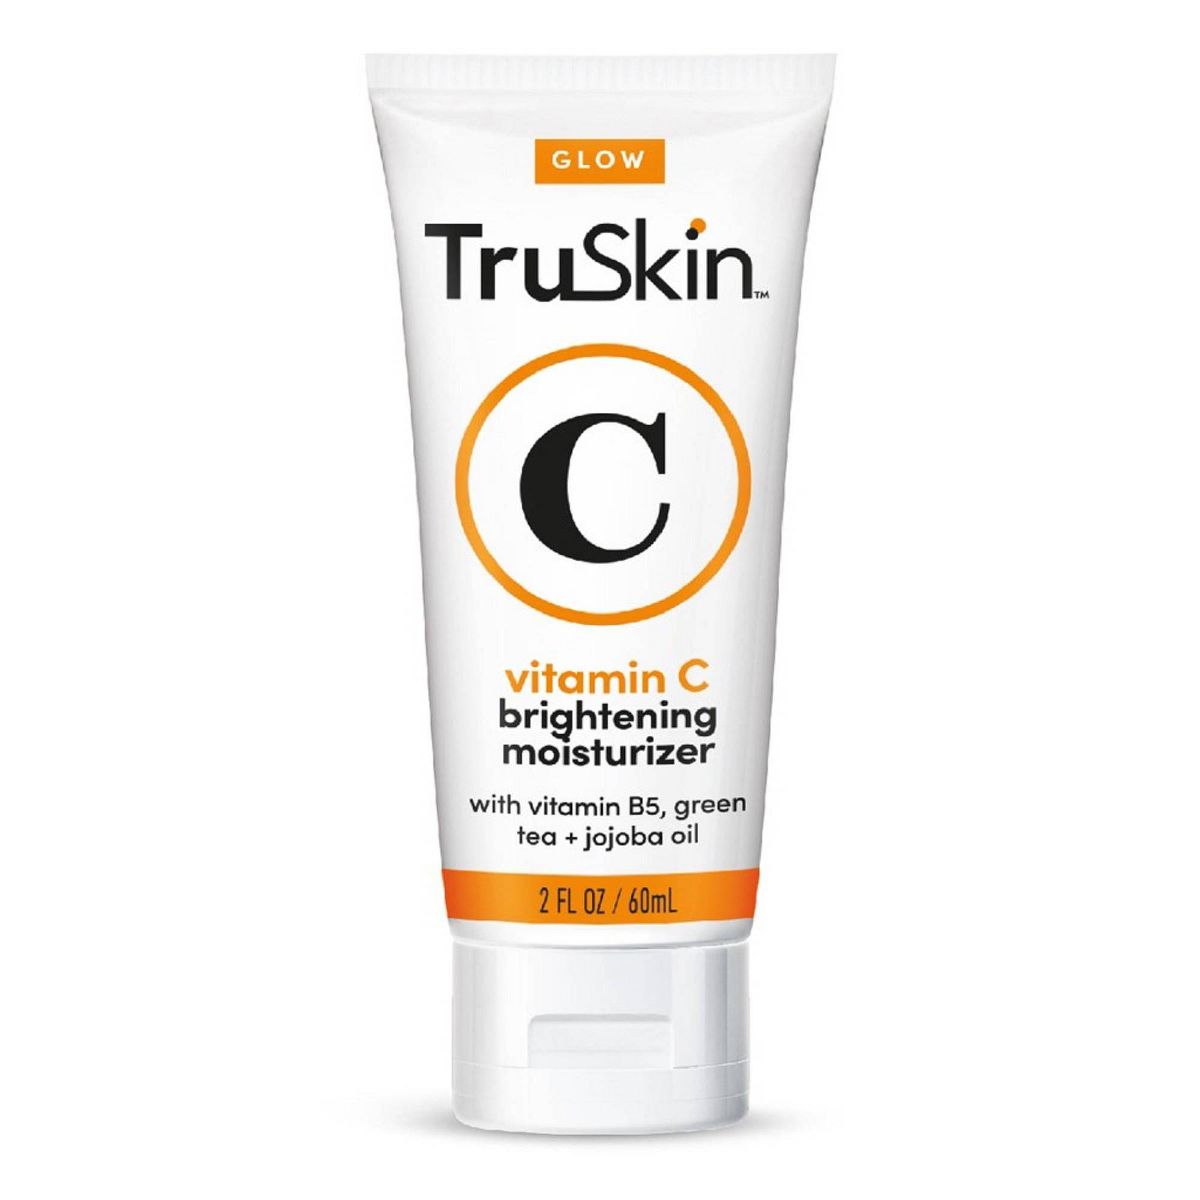 TruSkin Vitamin C Brightening Moisturizer for Face - 2 fl oz